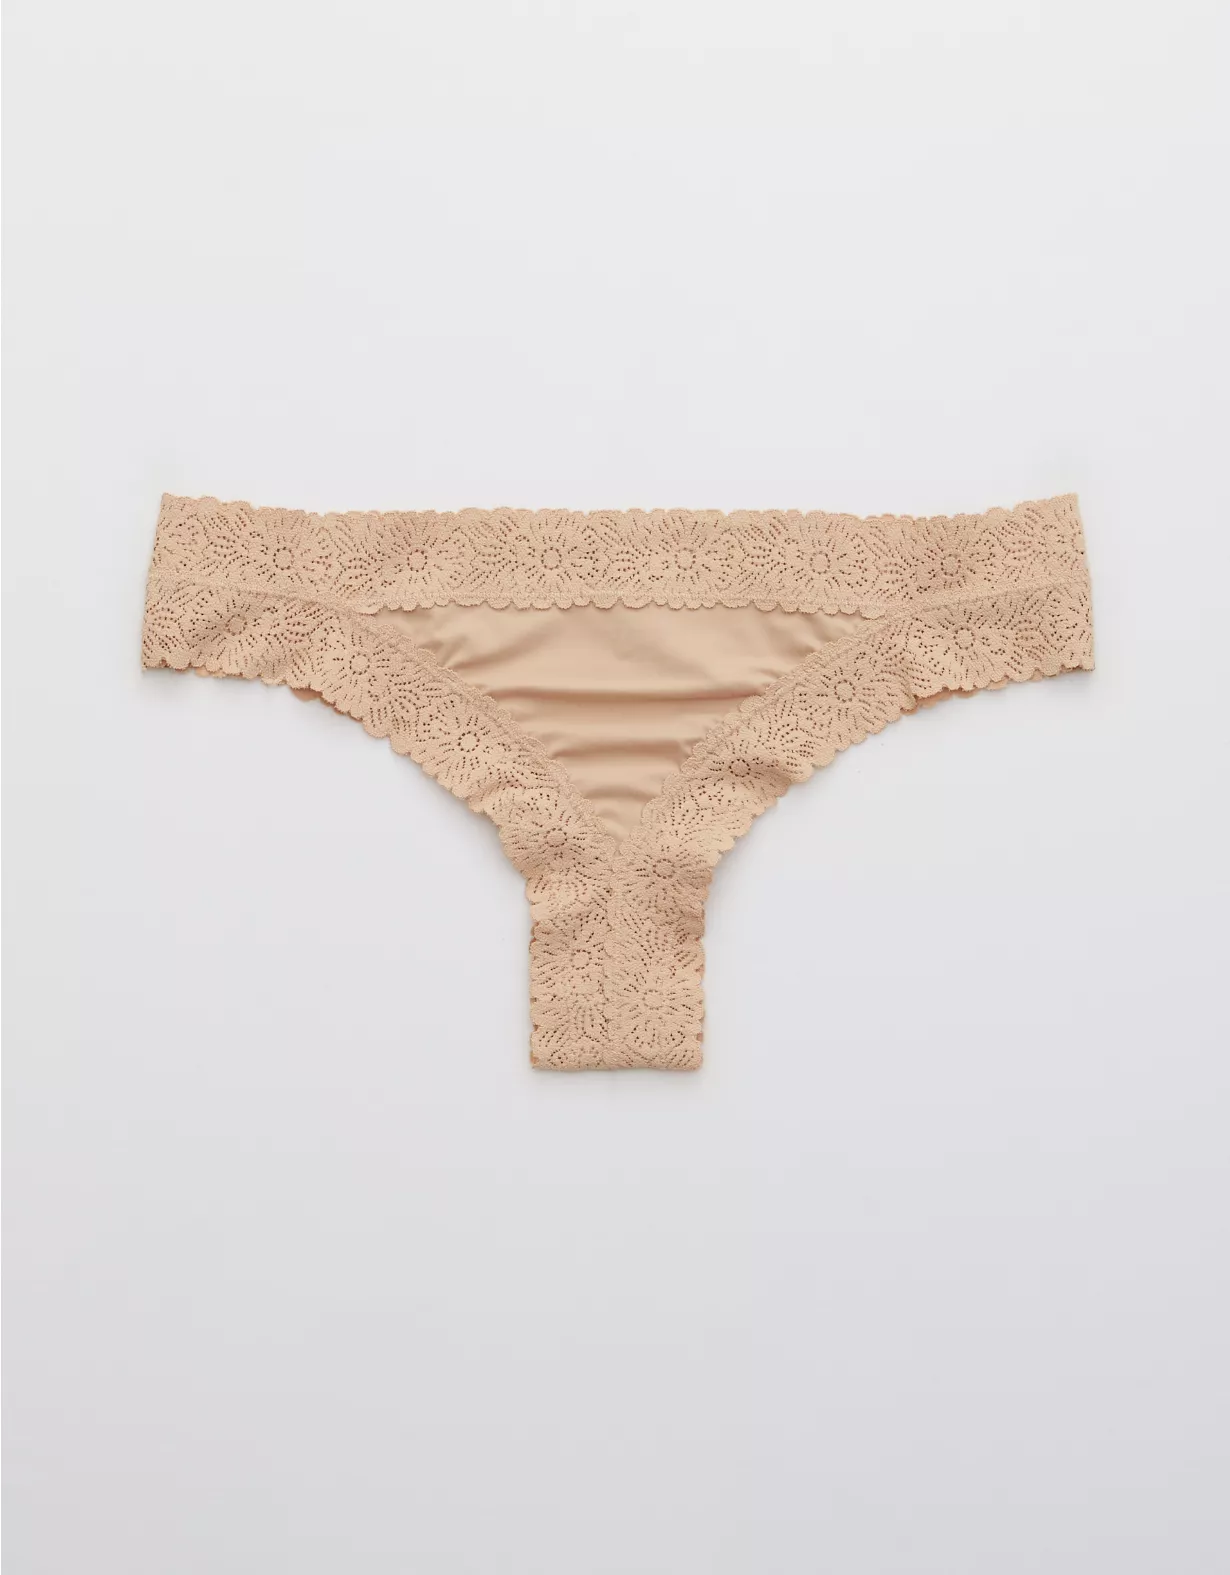 Aerie Sunnie Blossom Lace Thong Underwear